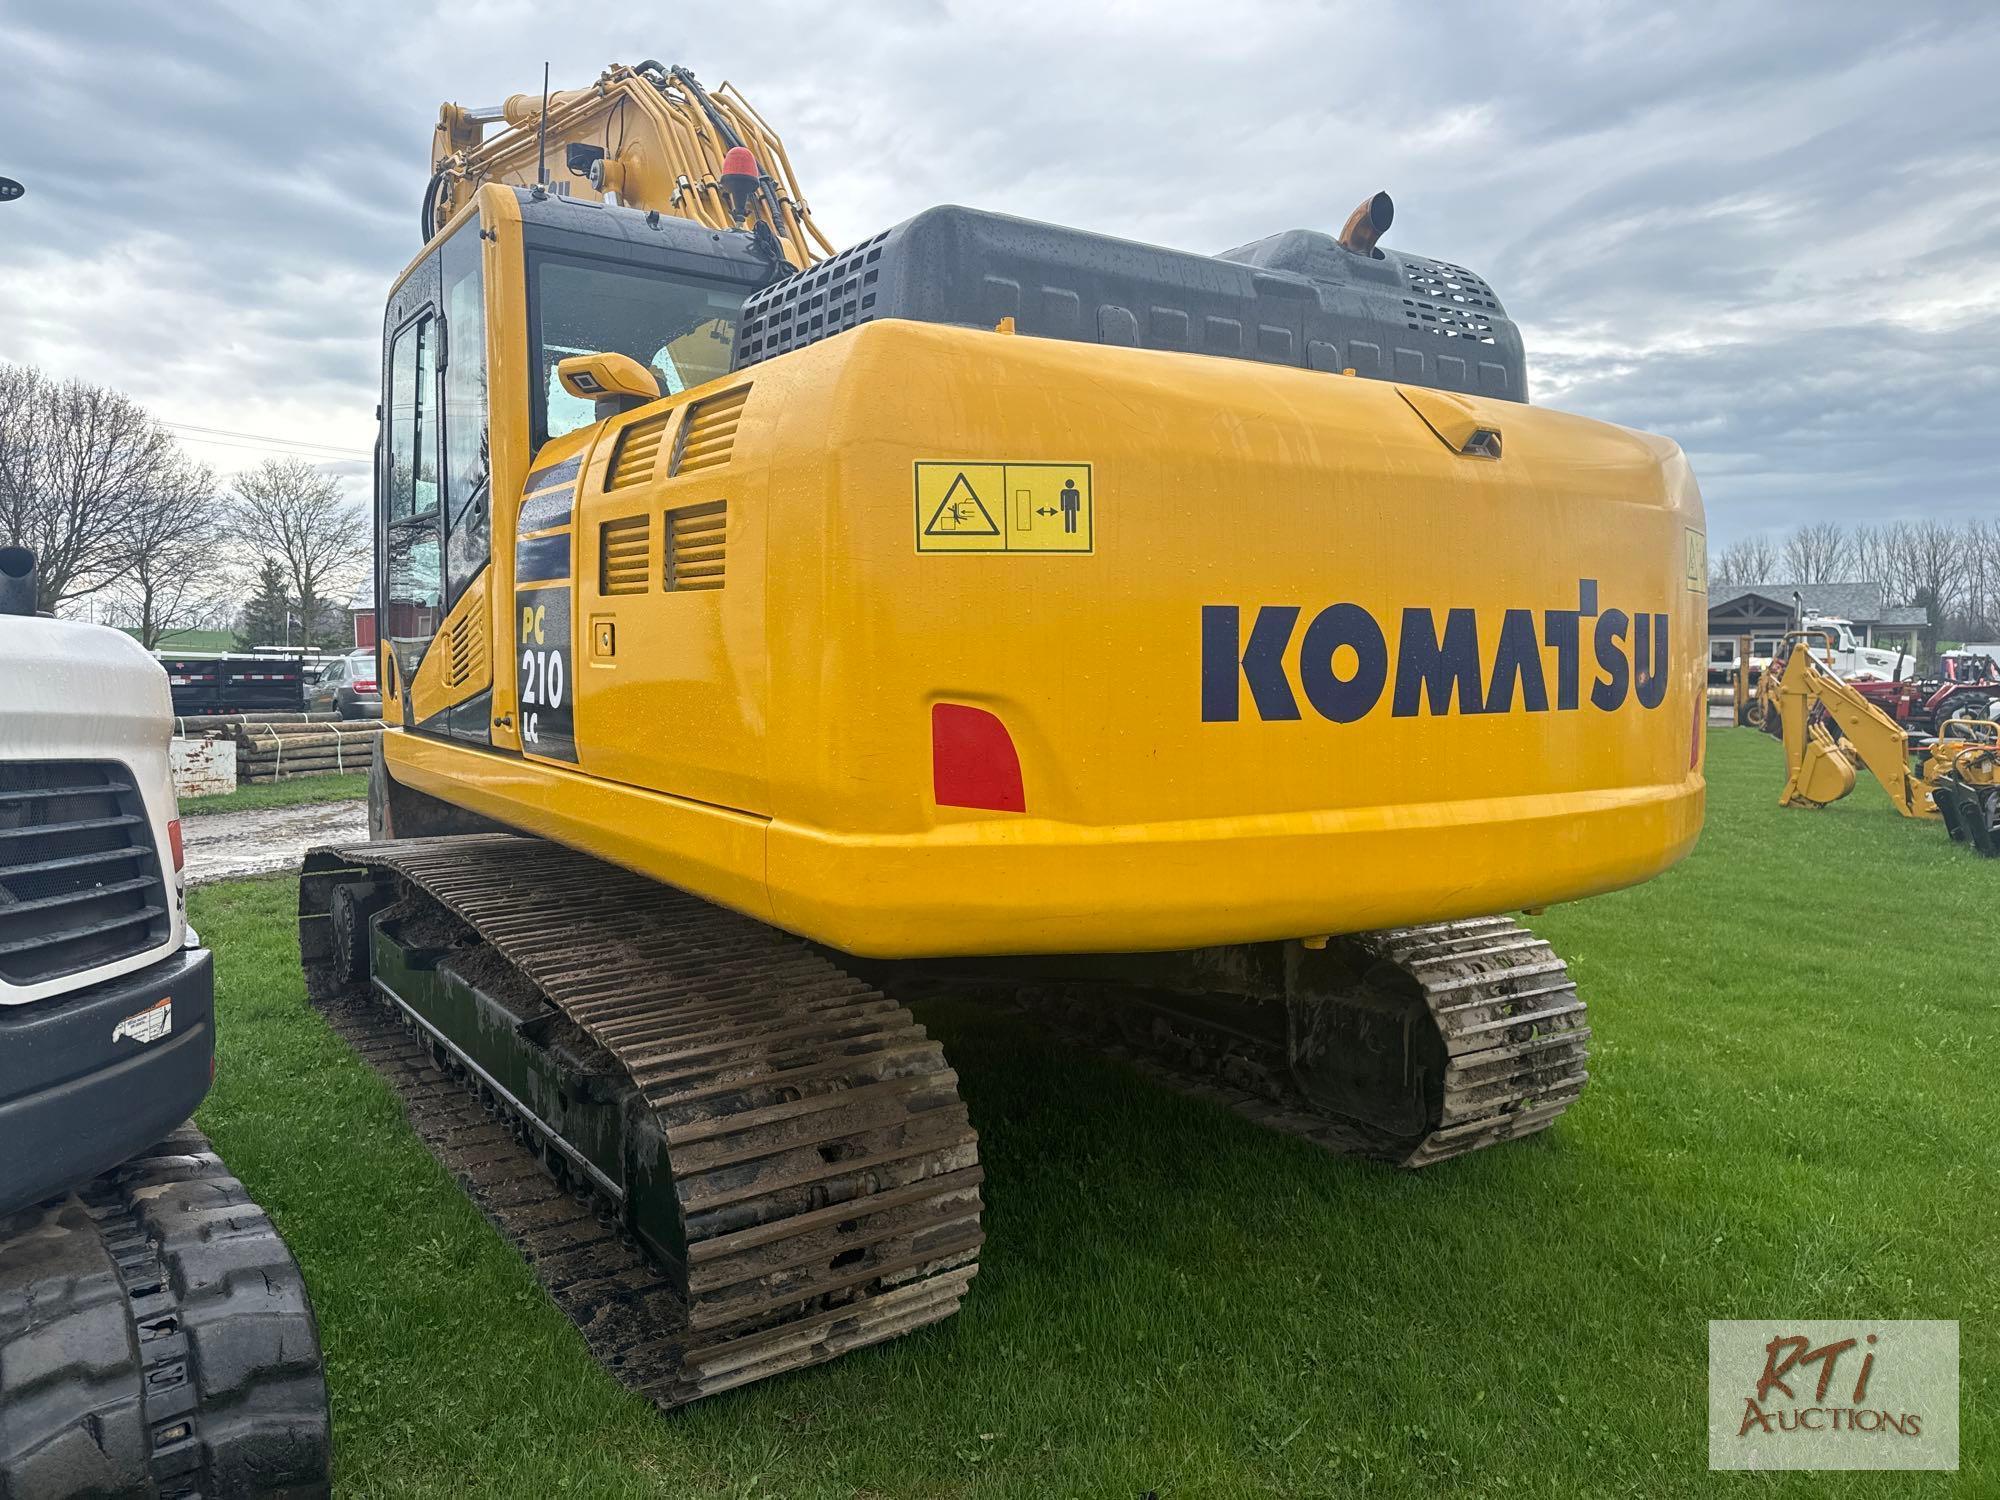 2020 Komatsu PC210LC-11 excavator, cab, hydraulic thumb, auxiliary hydraulics, hydraulic coupler,